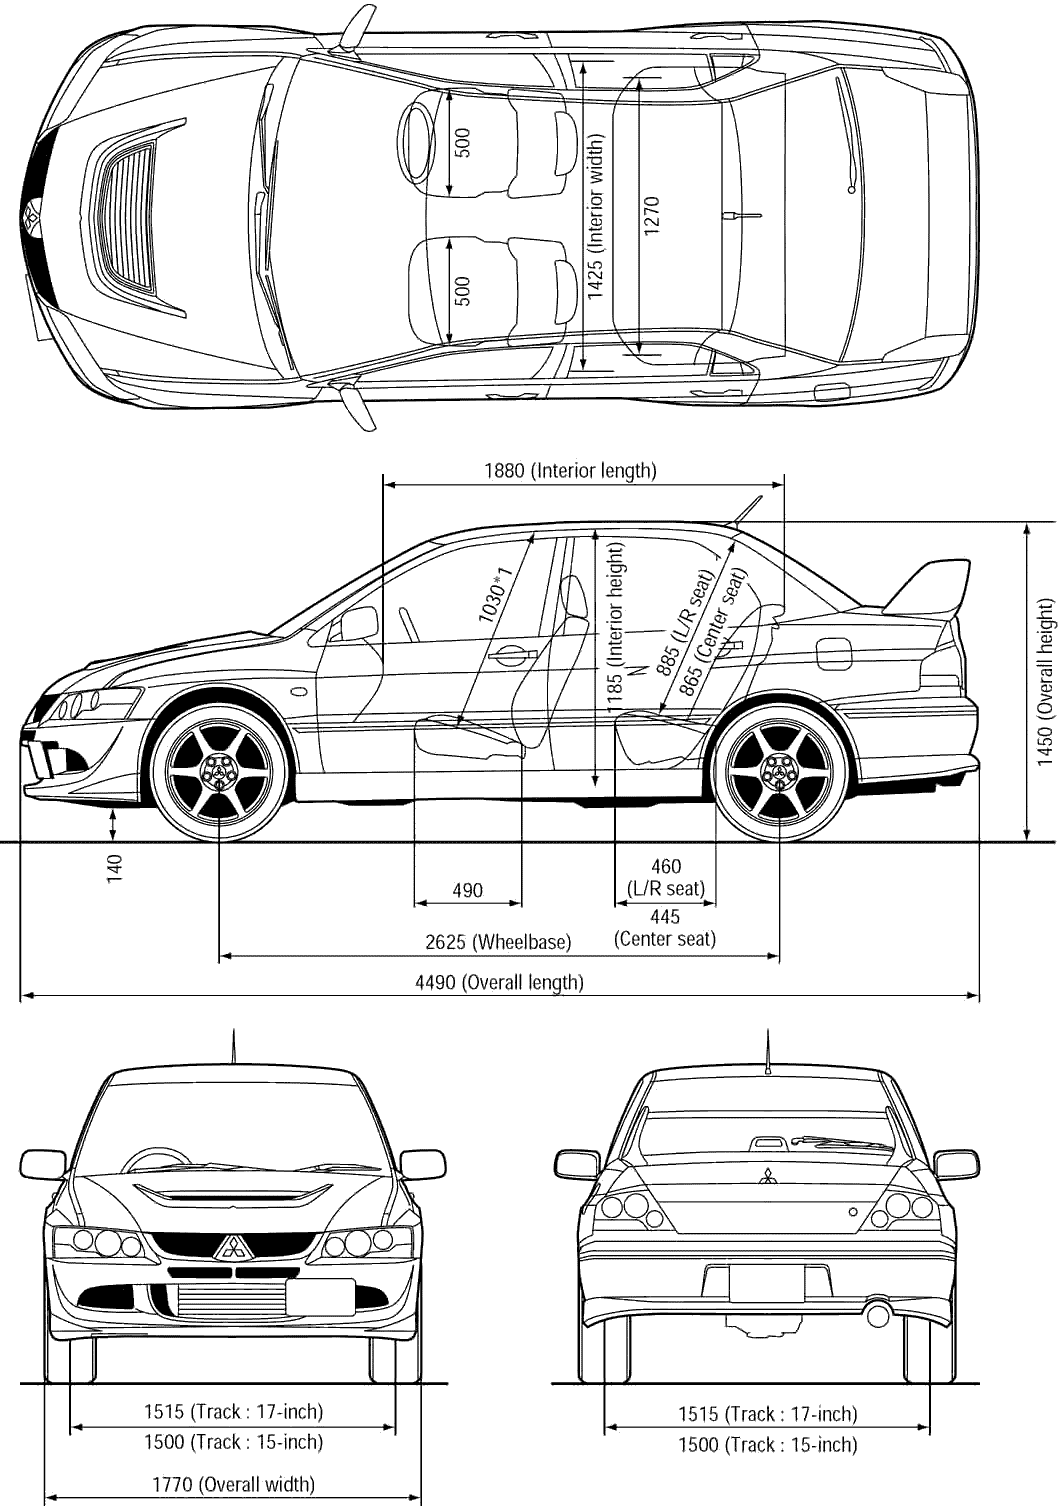 2003 Mitsubishi Lancer Evo Viii Sedan V4 Blueprints Free